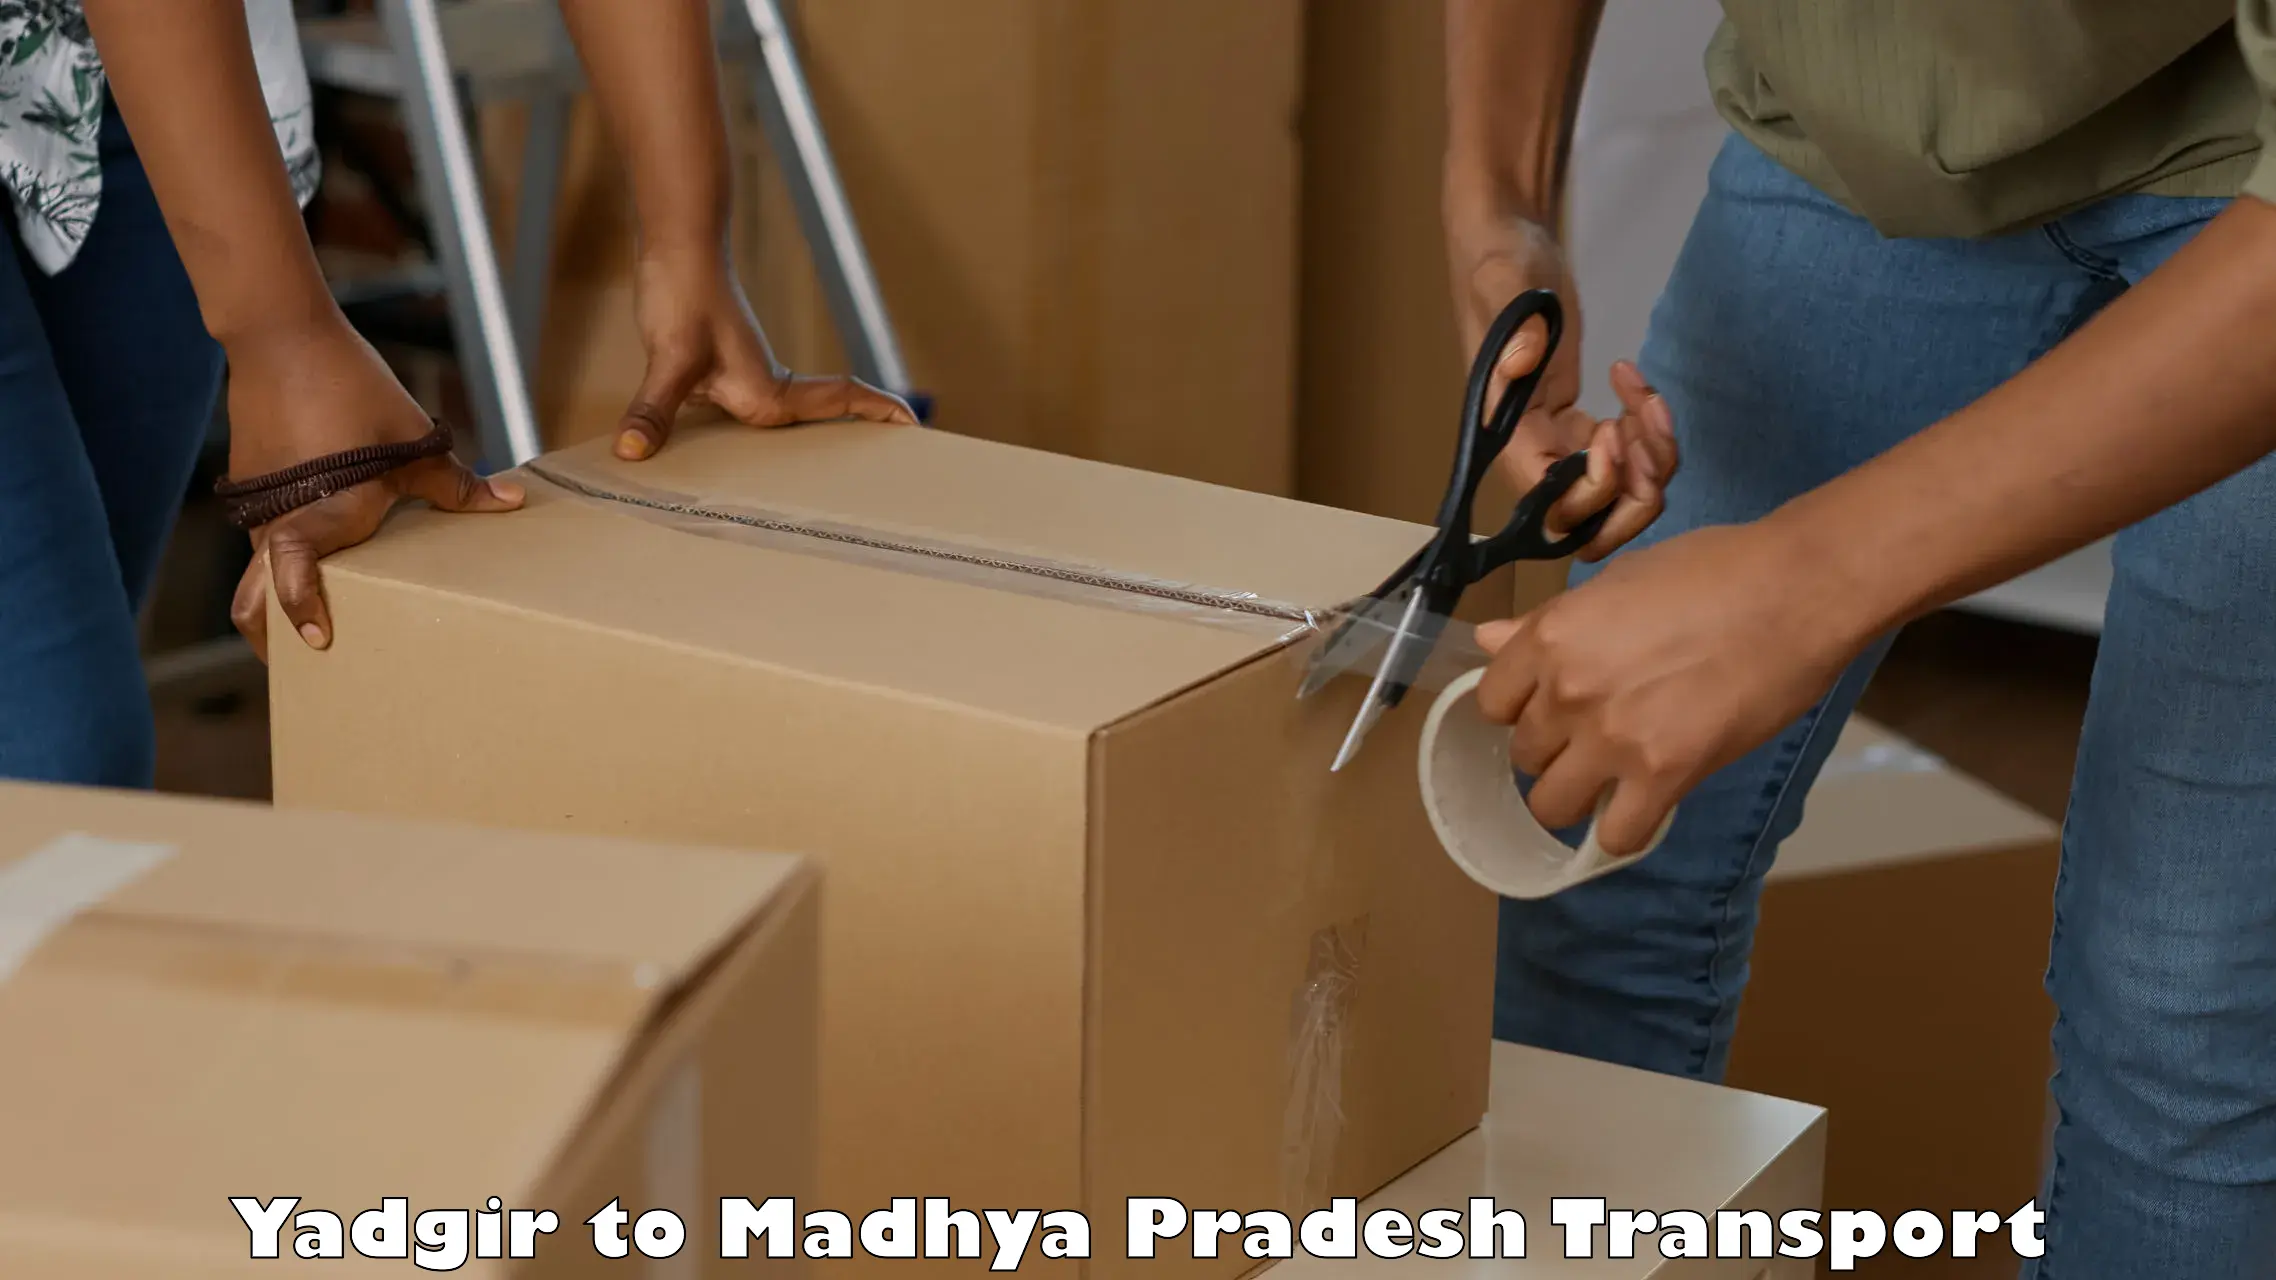 Lorry transport service Yadgir to Madhya Pradesh